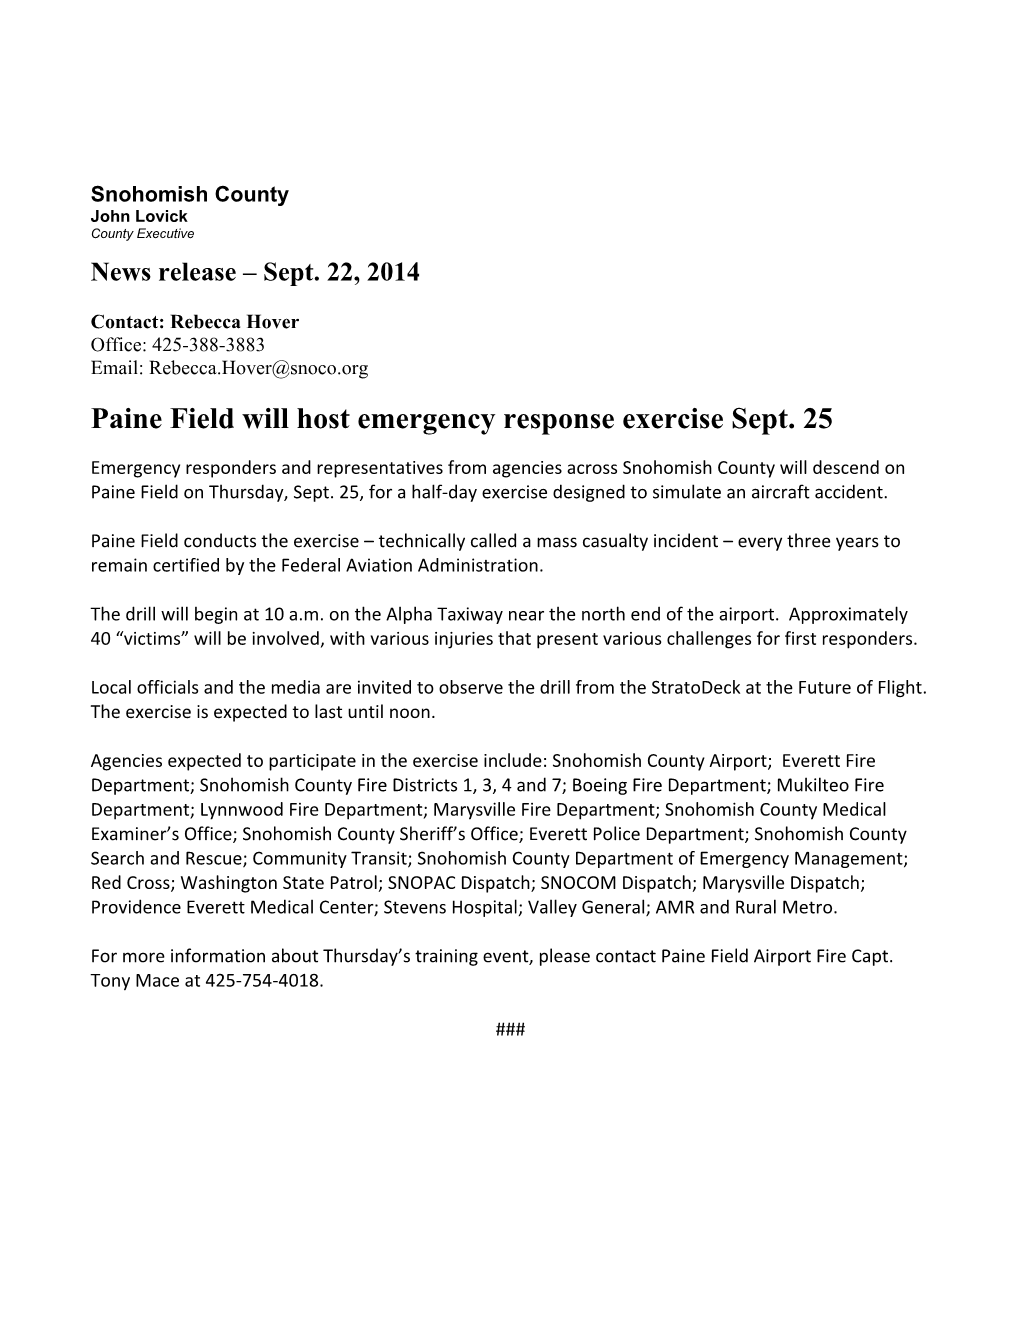 Paine Field Will Host Emergency Response Exercise Sept. 25